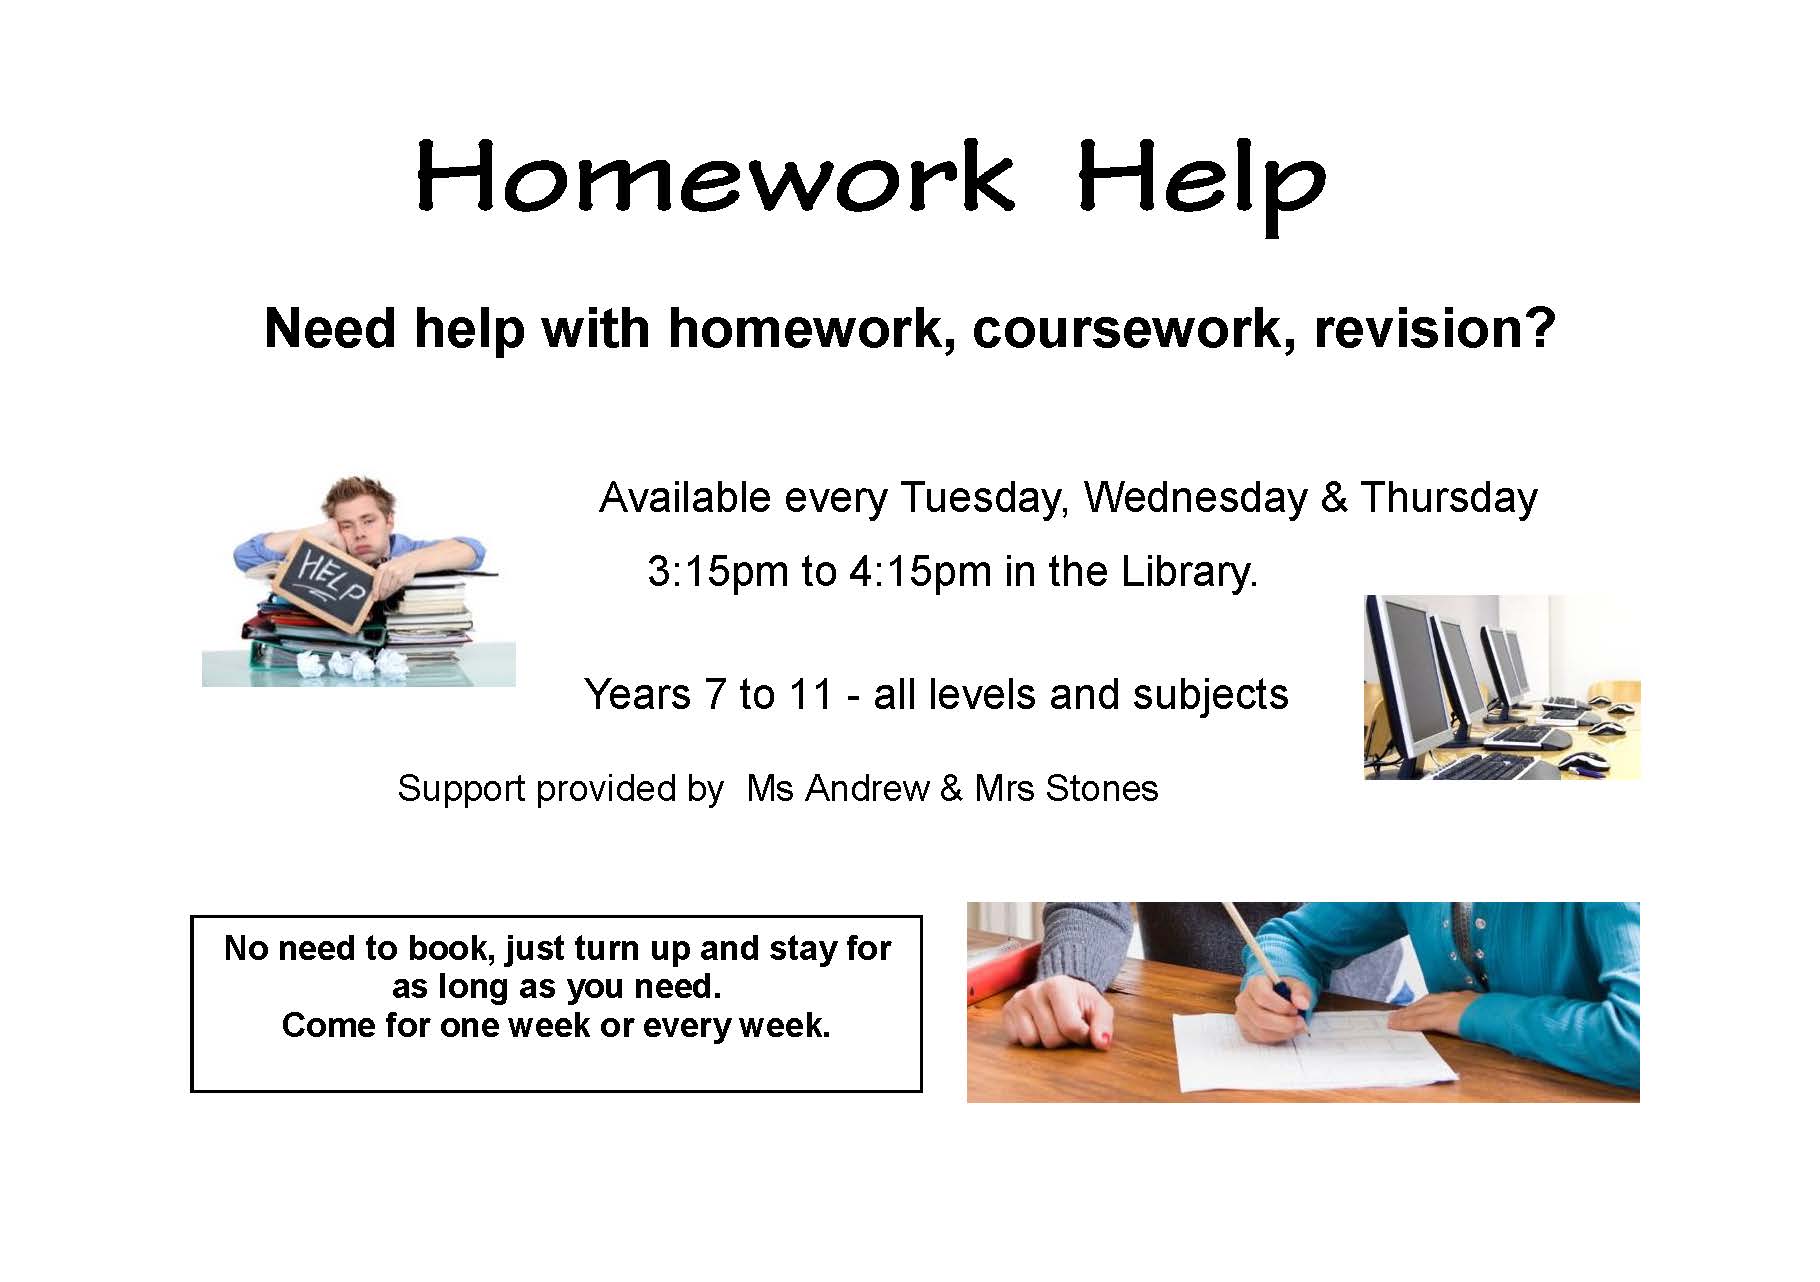 Homework answer service